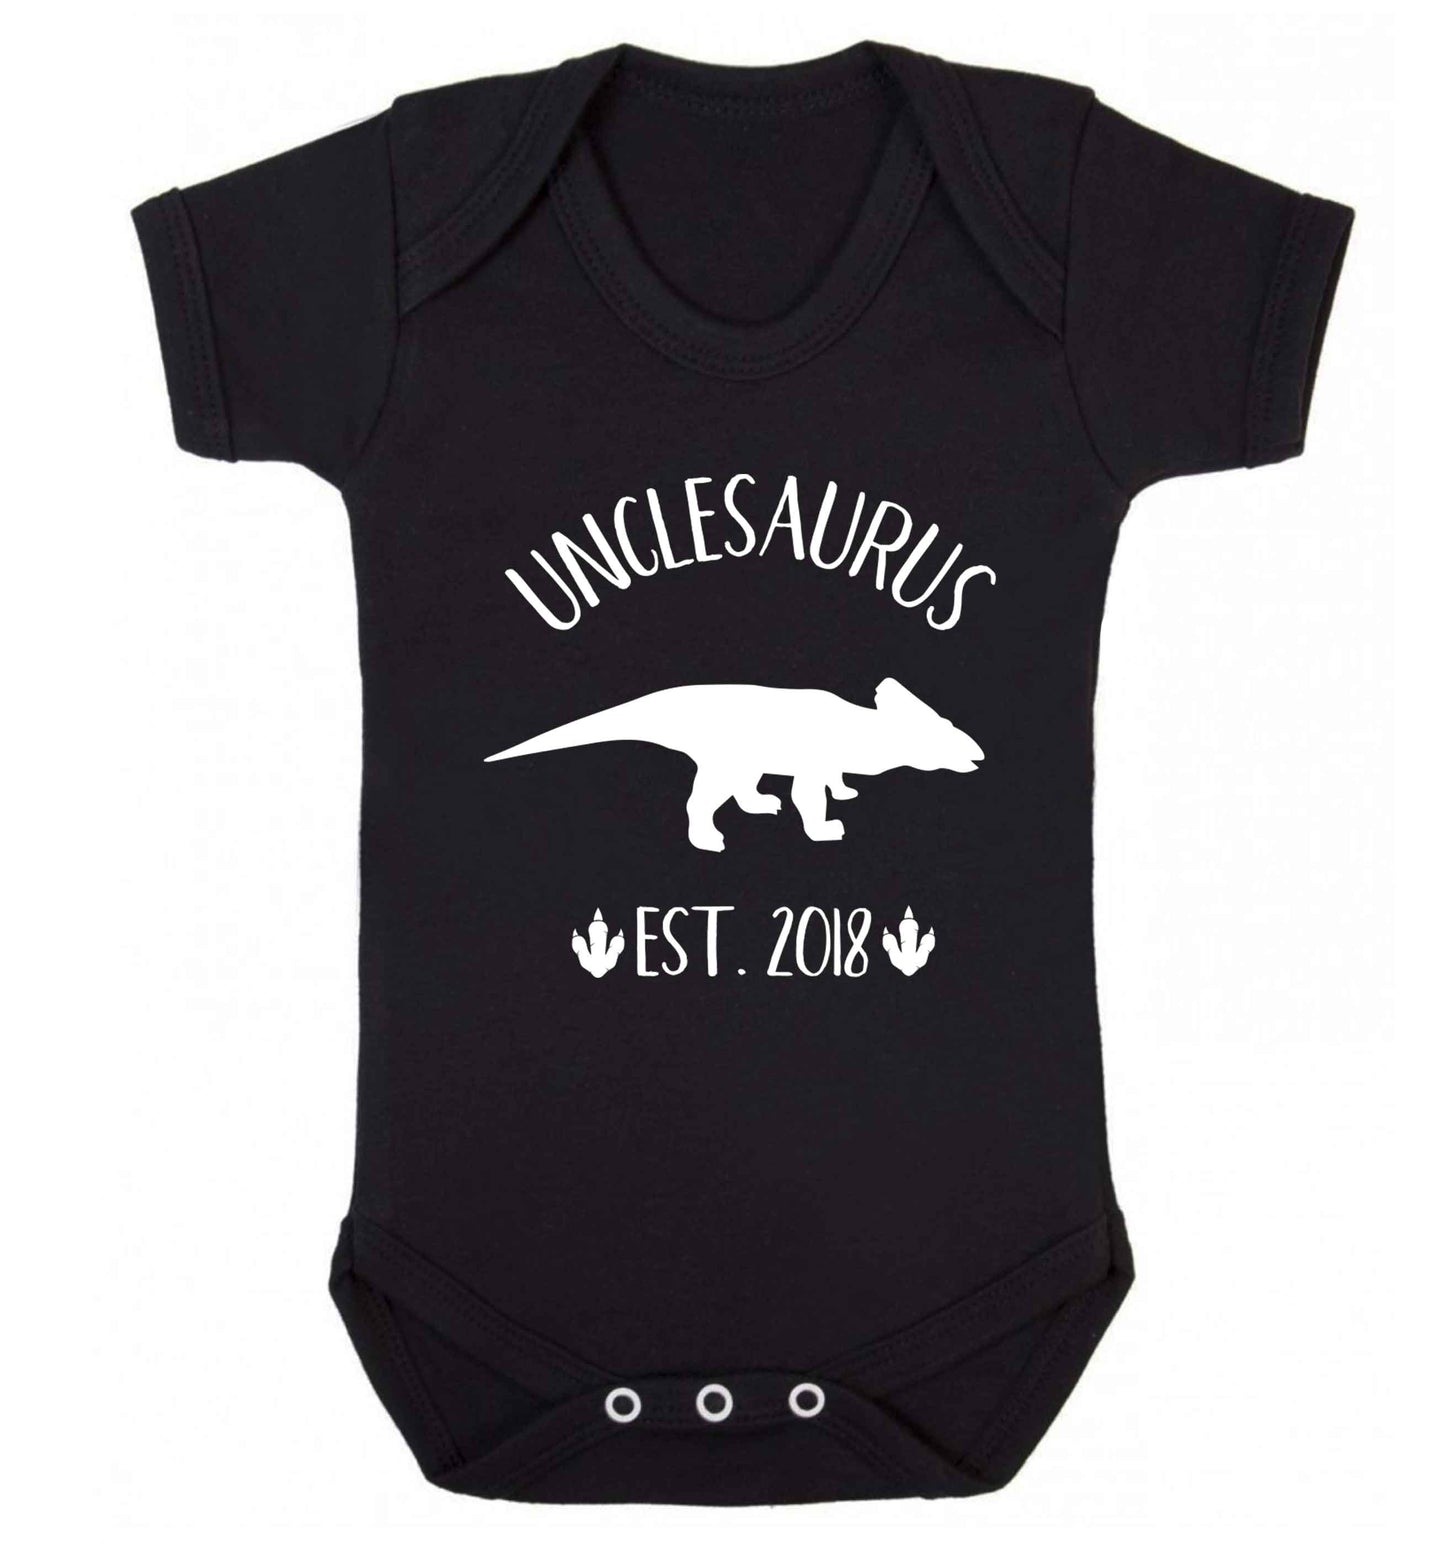 Personalised unclesaurus since (custom date) Baby Vest black 18-24 months